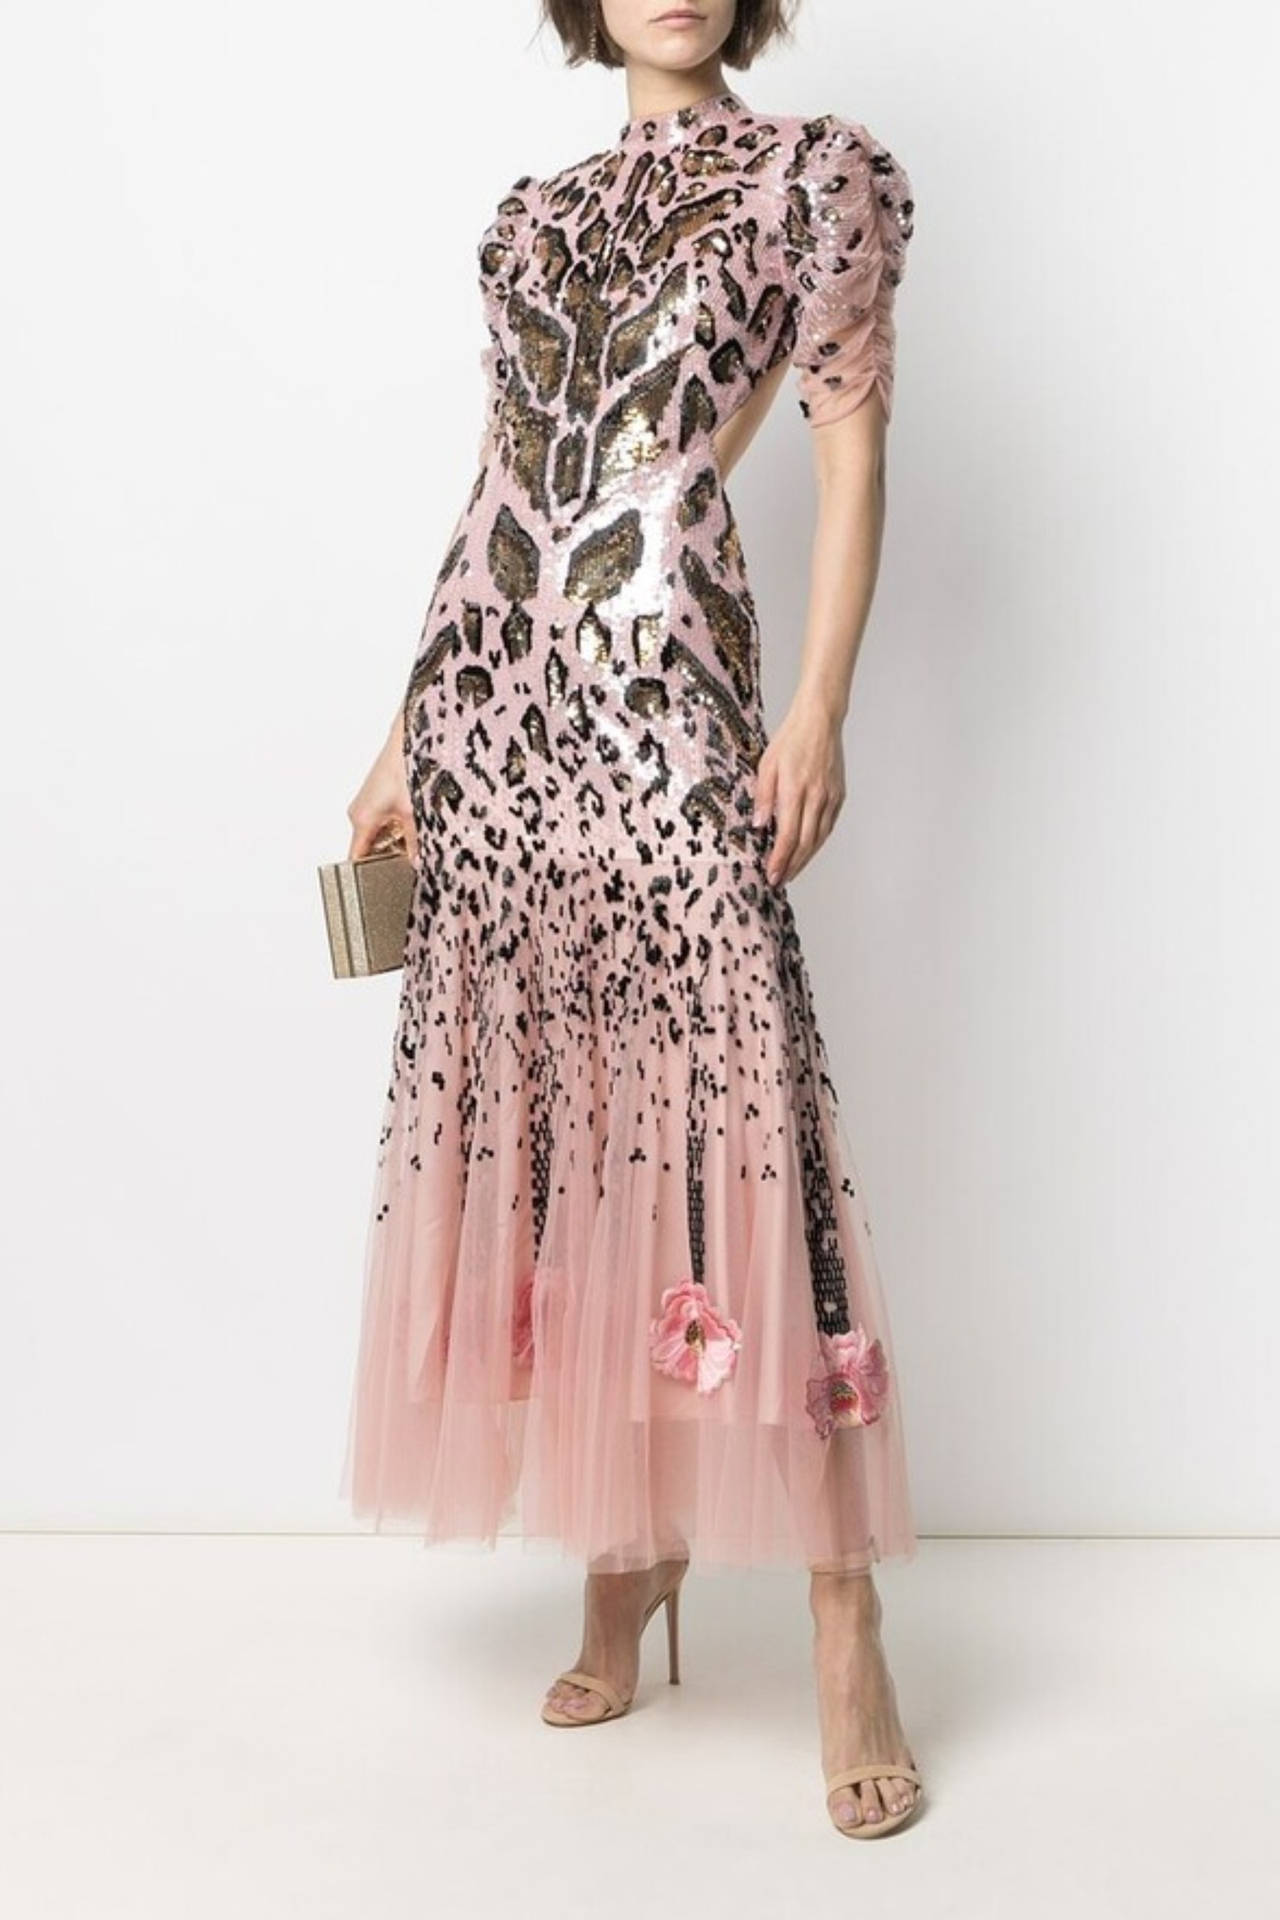 Elegant Chic in Temperley London Pink Dress Wallpaper